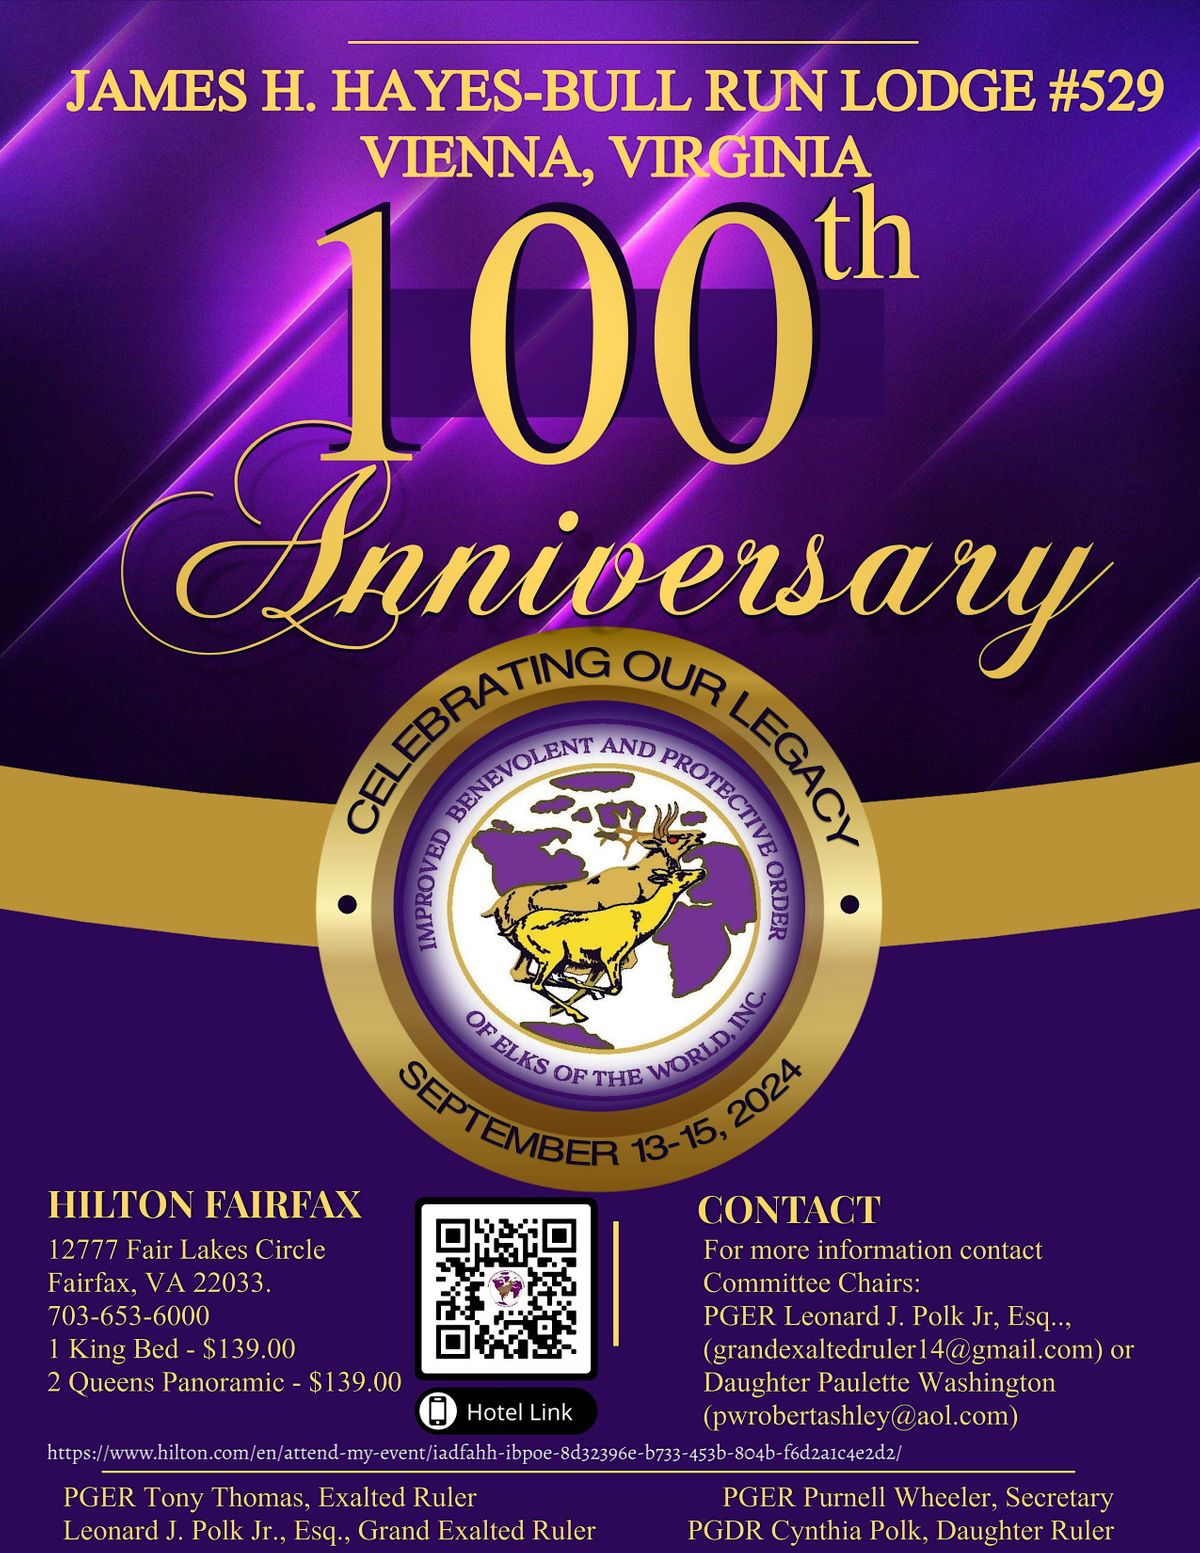 James H Hayes Lodge #529 - 100th Anniversary Celebration